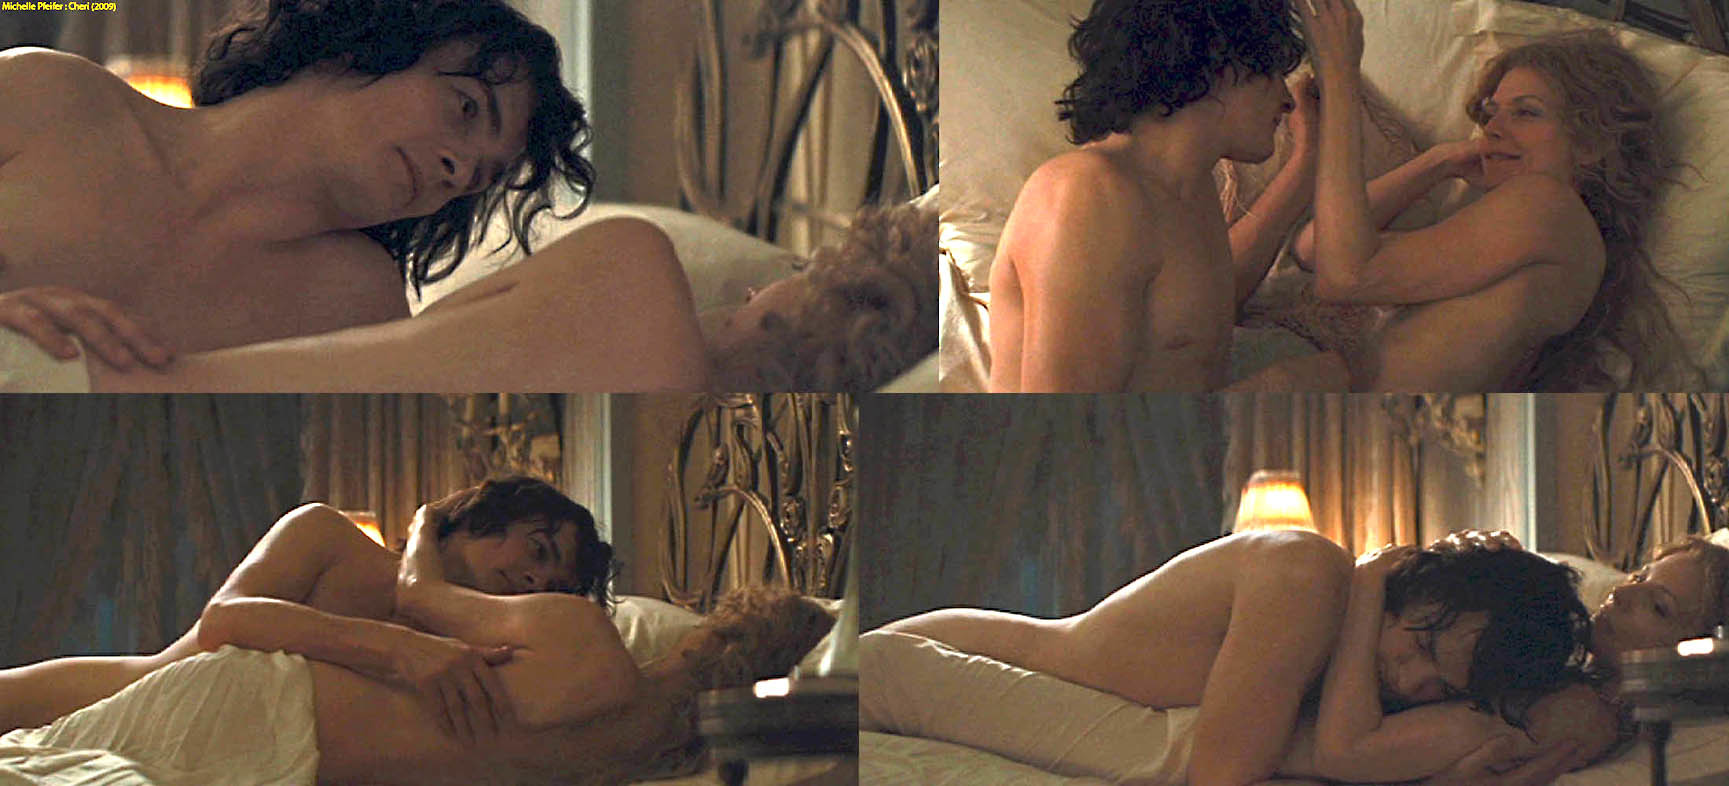 Michelle pfeiffer topless